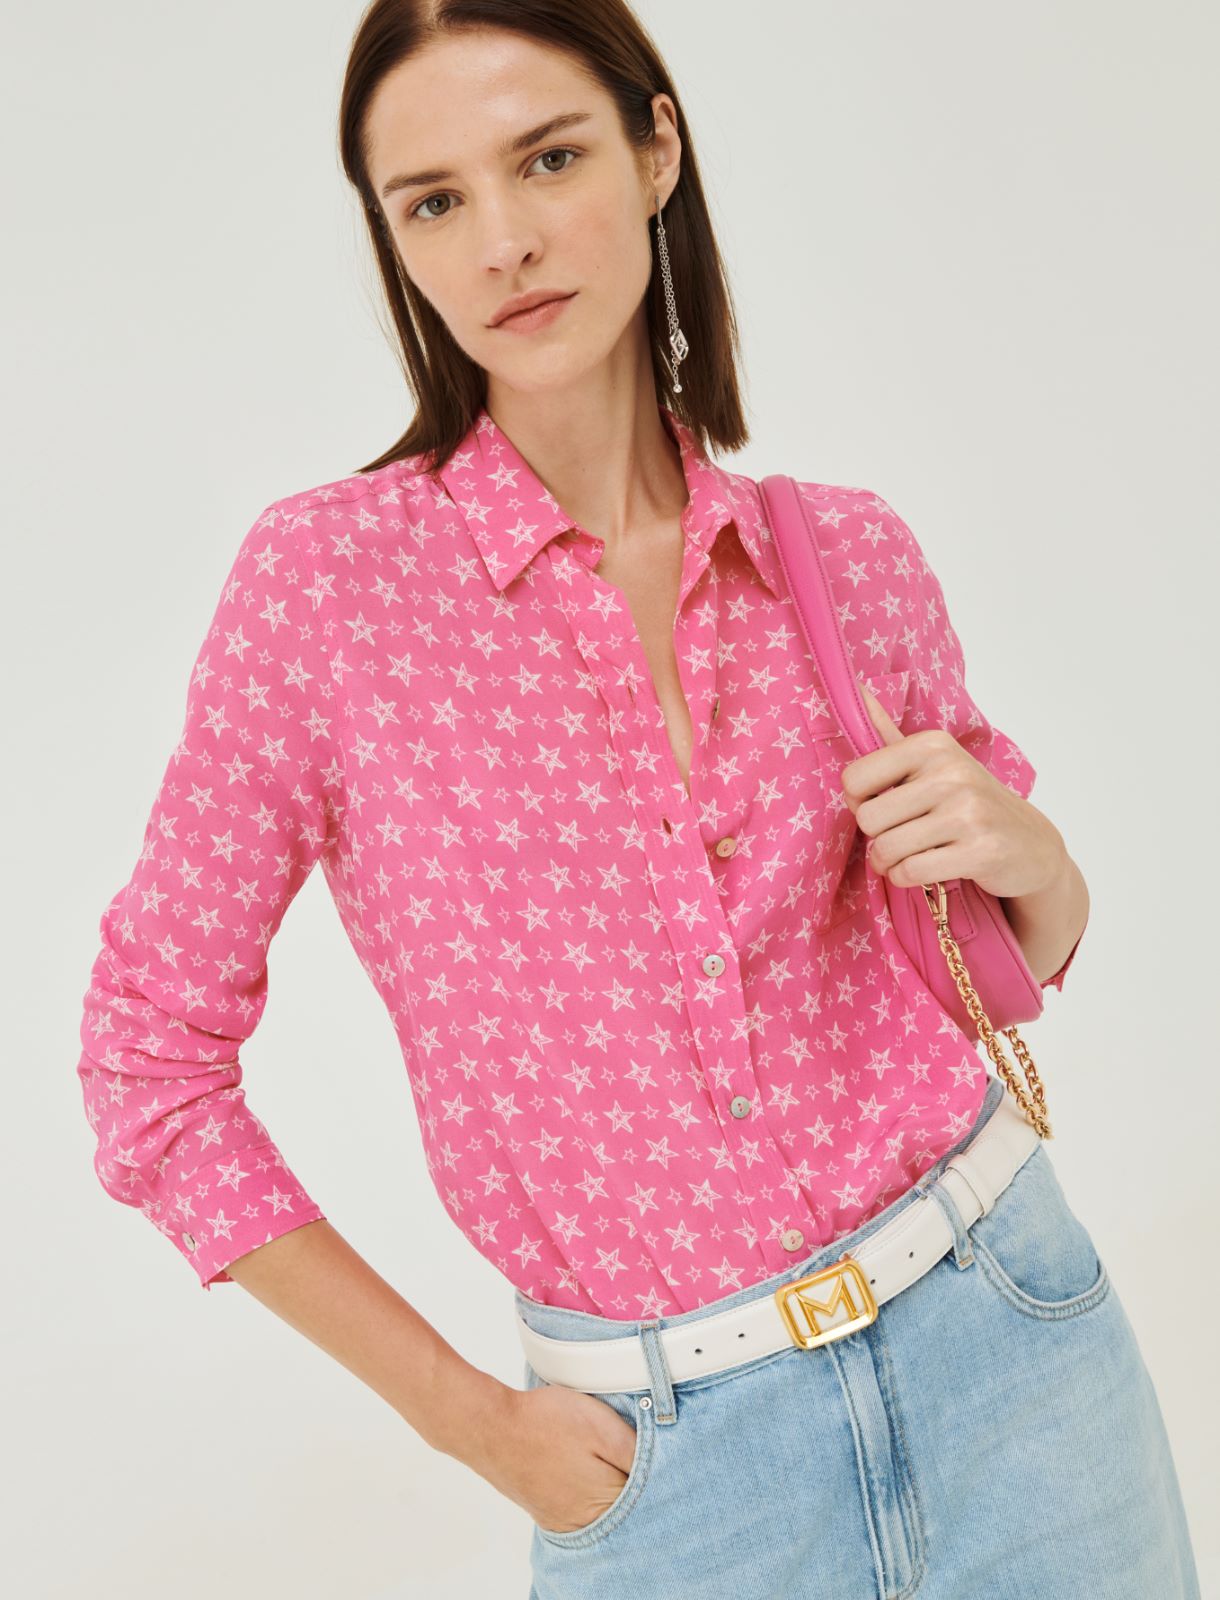 Patterned shirt - Shocking pink - Marina Rinaldi - 3